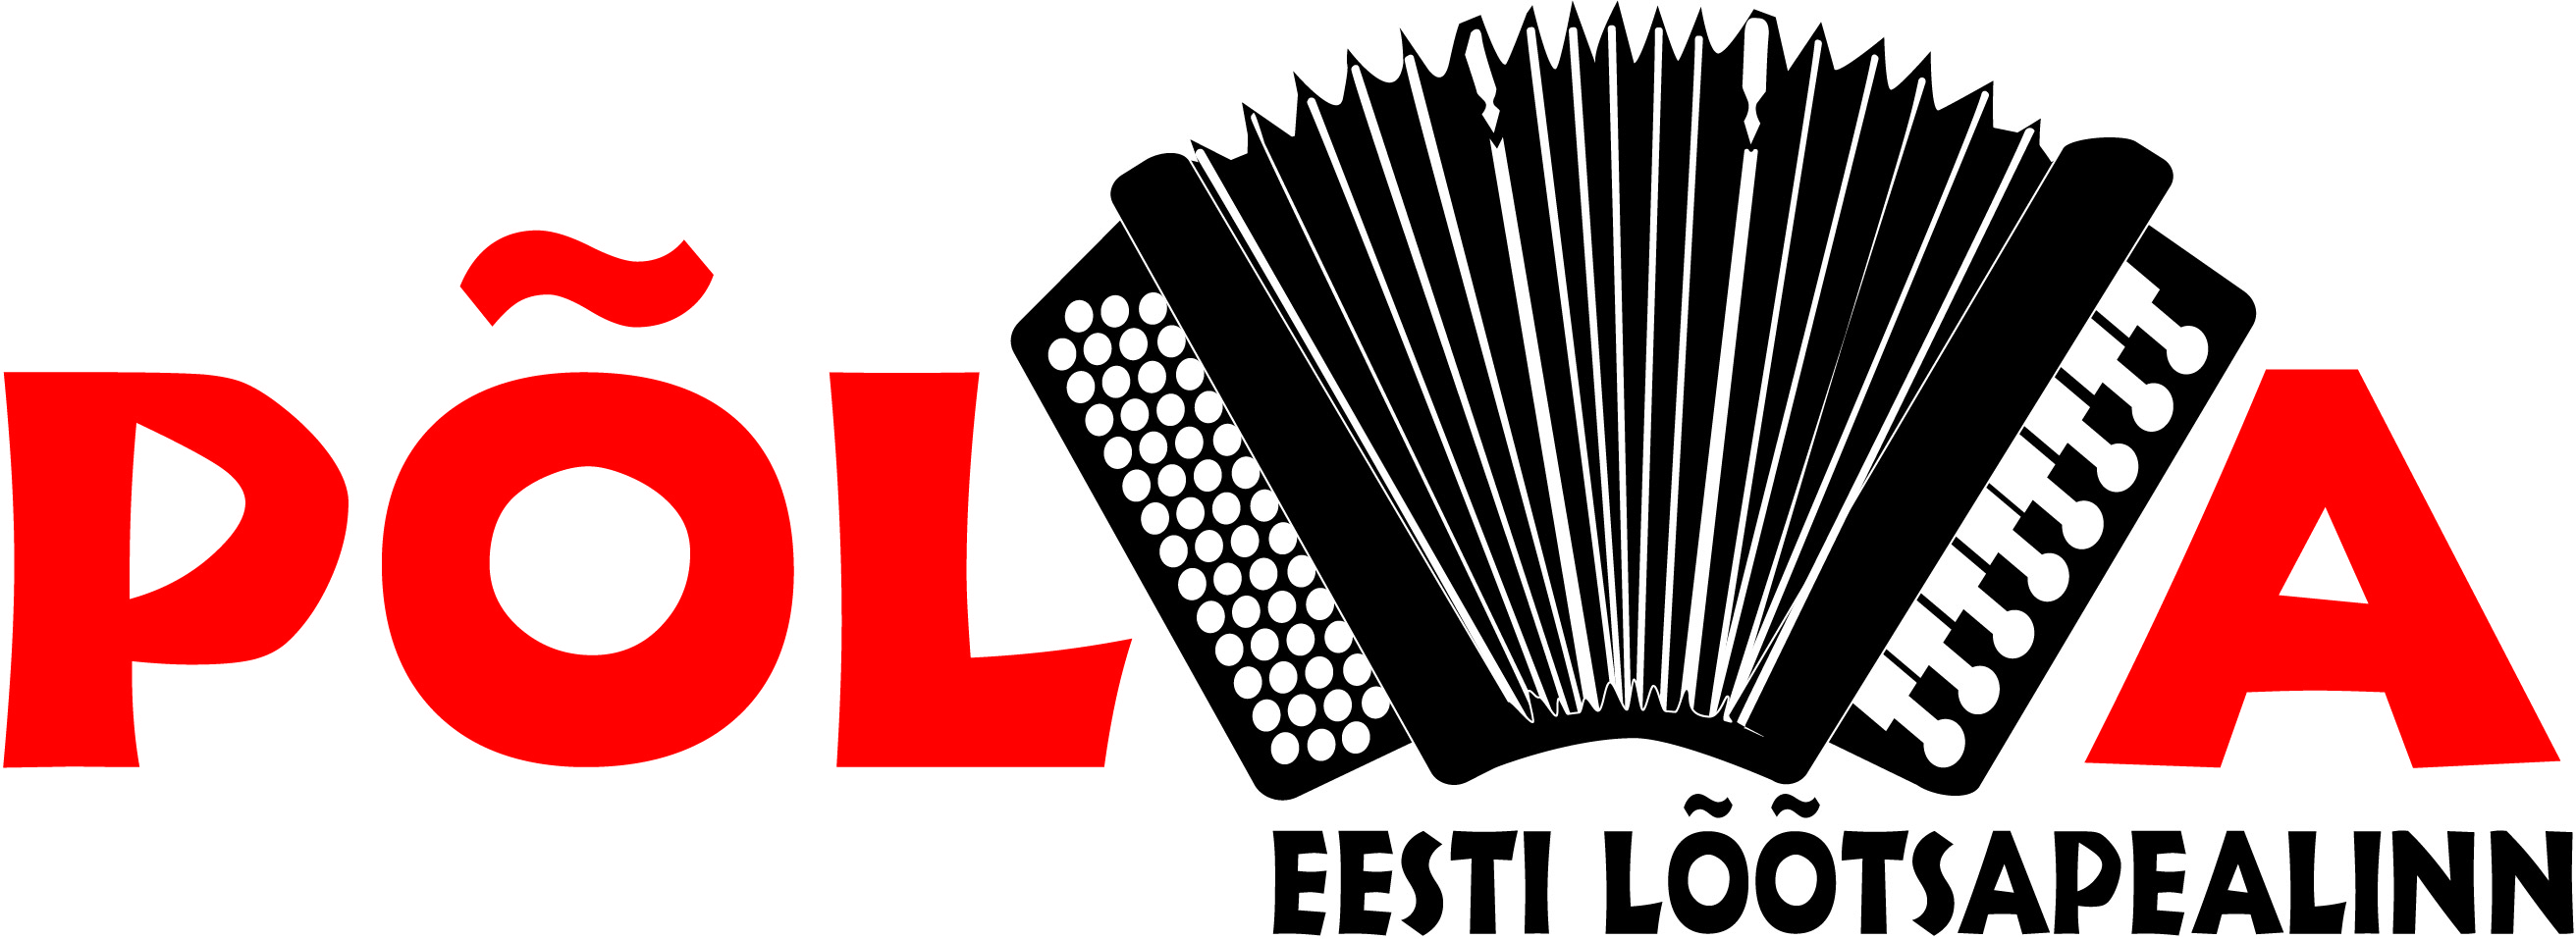 "Põlva - Eesti lõõtsapealinn" logo